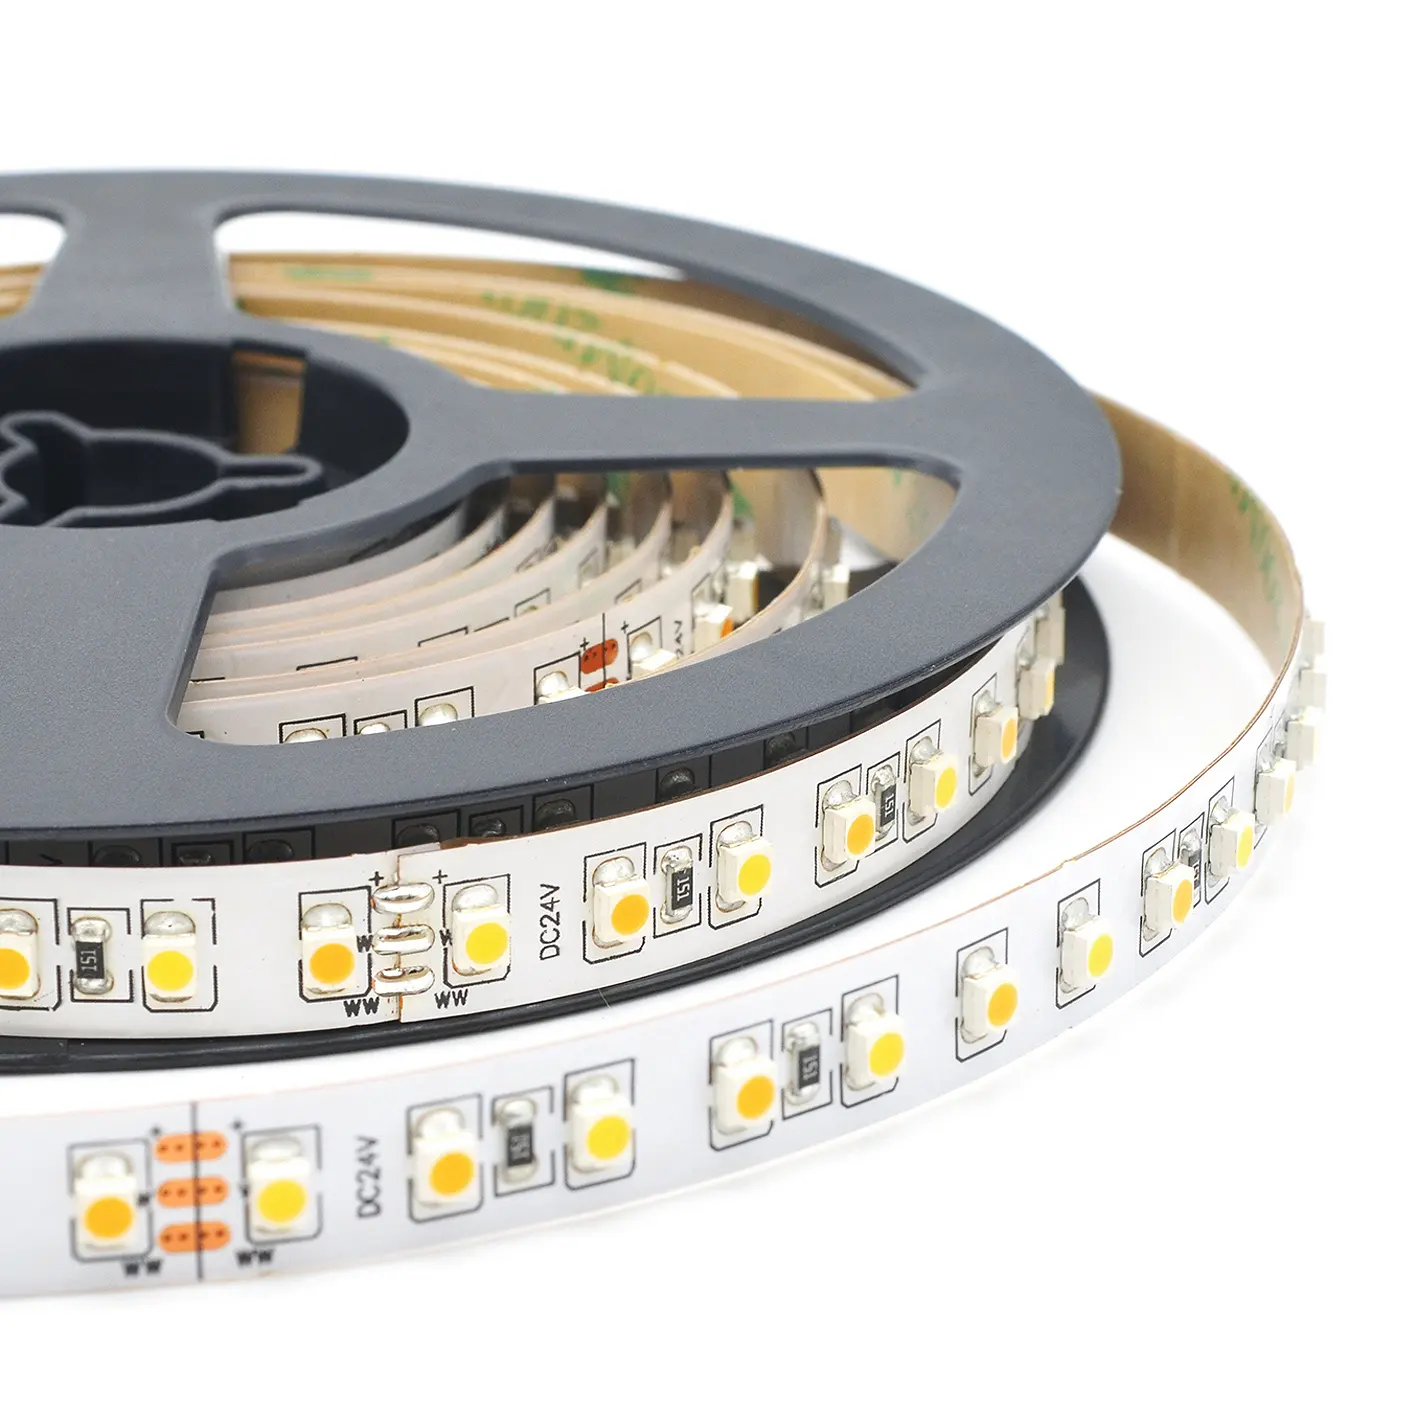 Lanple Langlebige mehrfarbige Luces LED 2700K-10000K DC 24V Ruban LED SMD 3528 Flexibler LED-Streifen